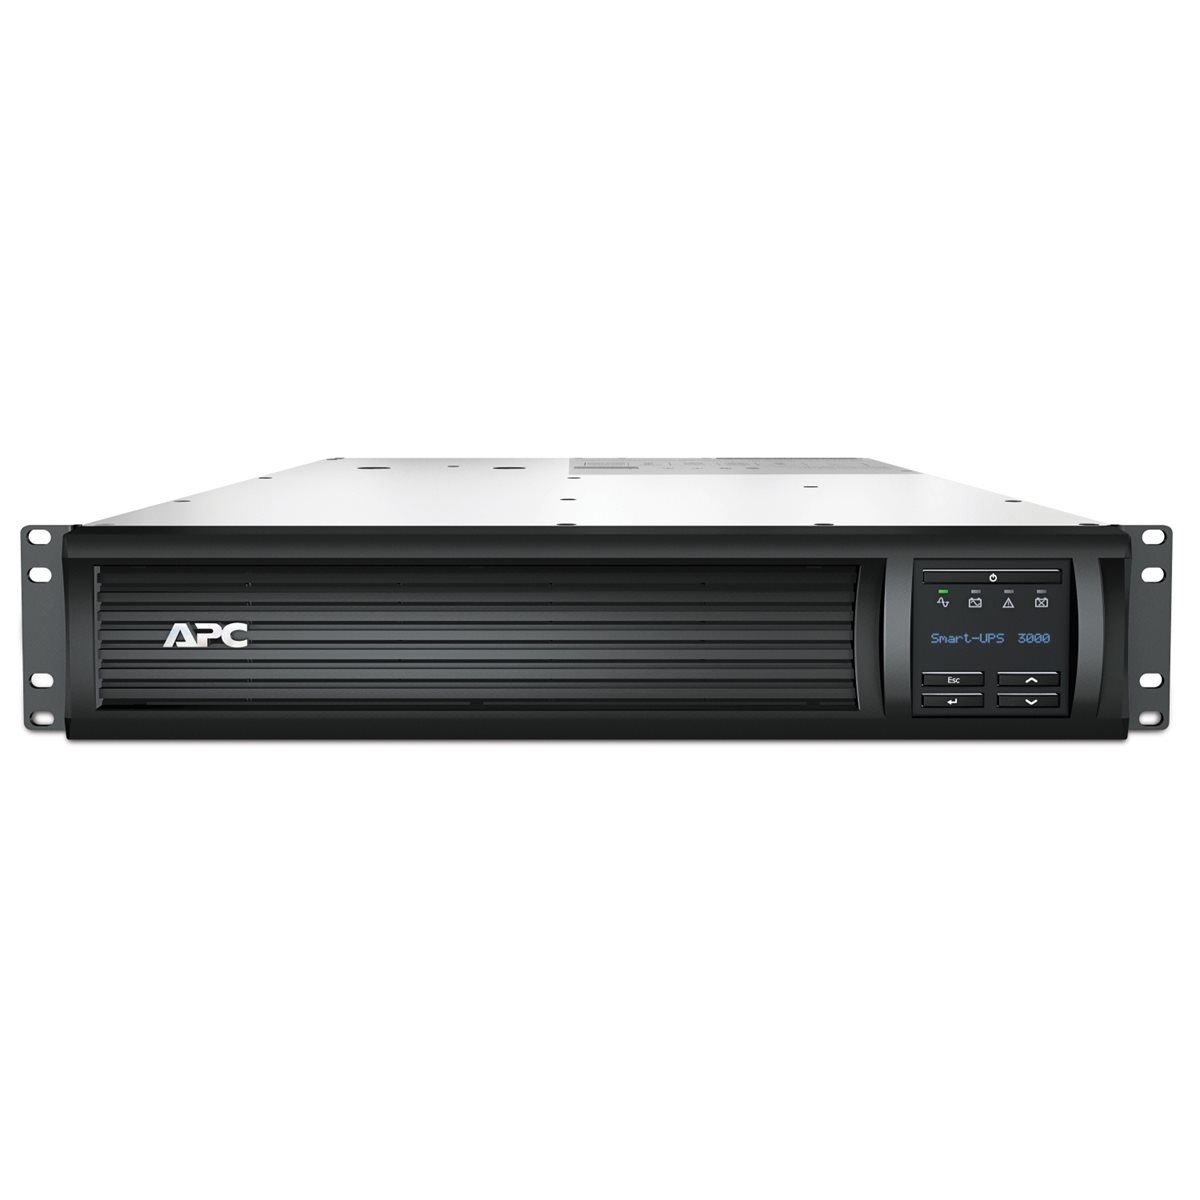 APC Smart-UPS 3000 RM 2U LCD - UPS (rack-mountable) - 120 V - 2.7 - 3000 VA - Ethernet, RS-232, USB - output connectors- 8 - Black - with APC UPS Network Management Card | Dell USA